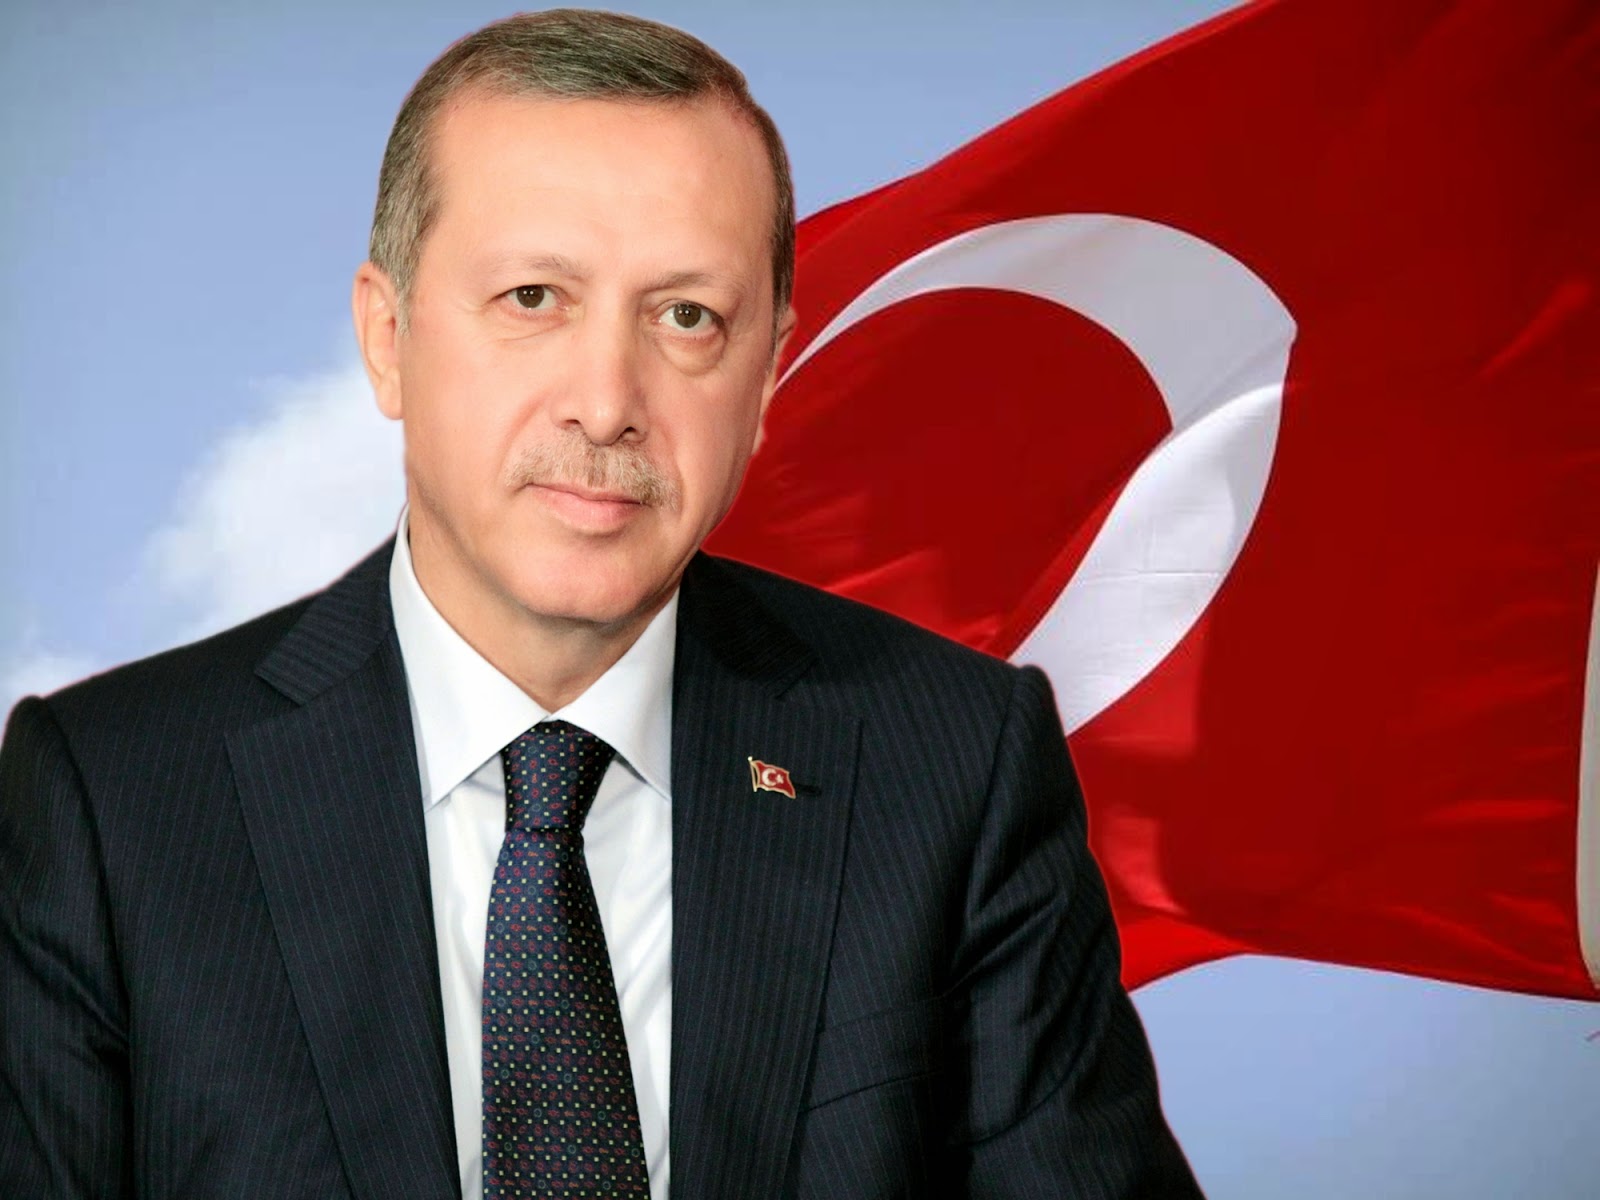 recep tayyip erdoğan hd wallpaper,official,businessperson,spokesperson,white collar worker,photography